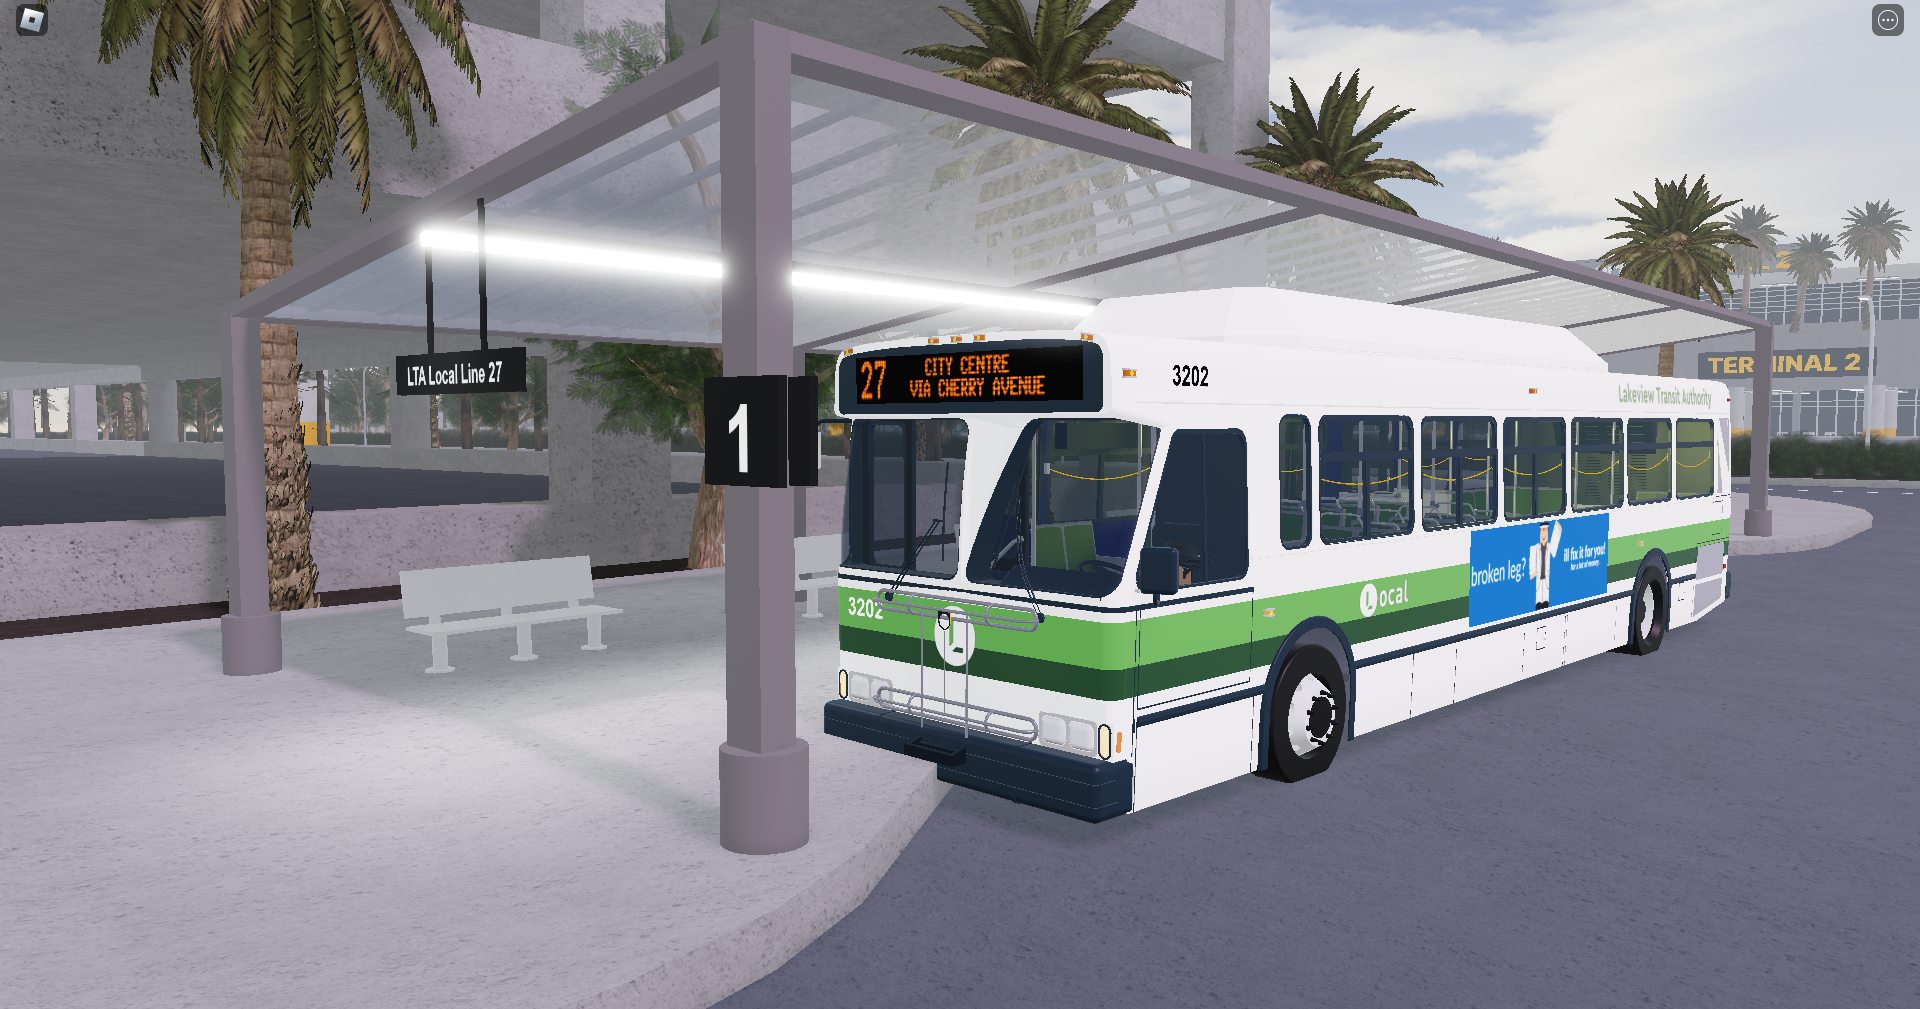 Revelia Transit Authority, ROBLOX Public Transit Wiki